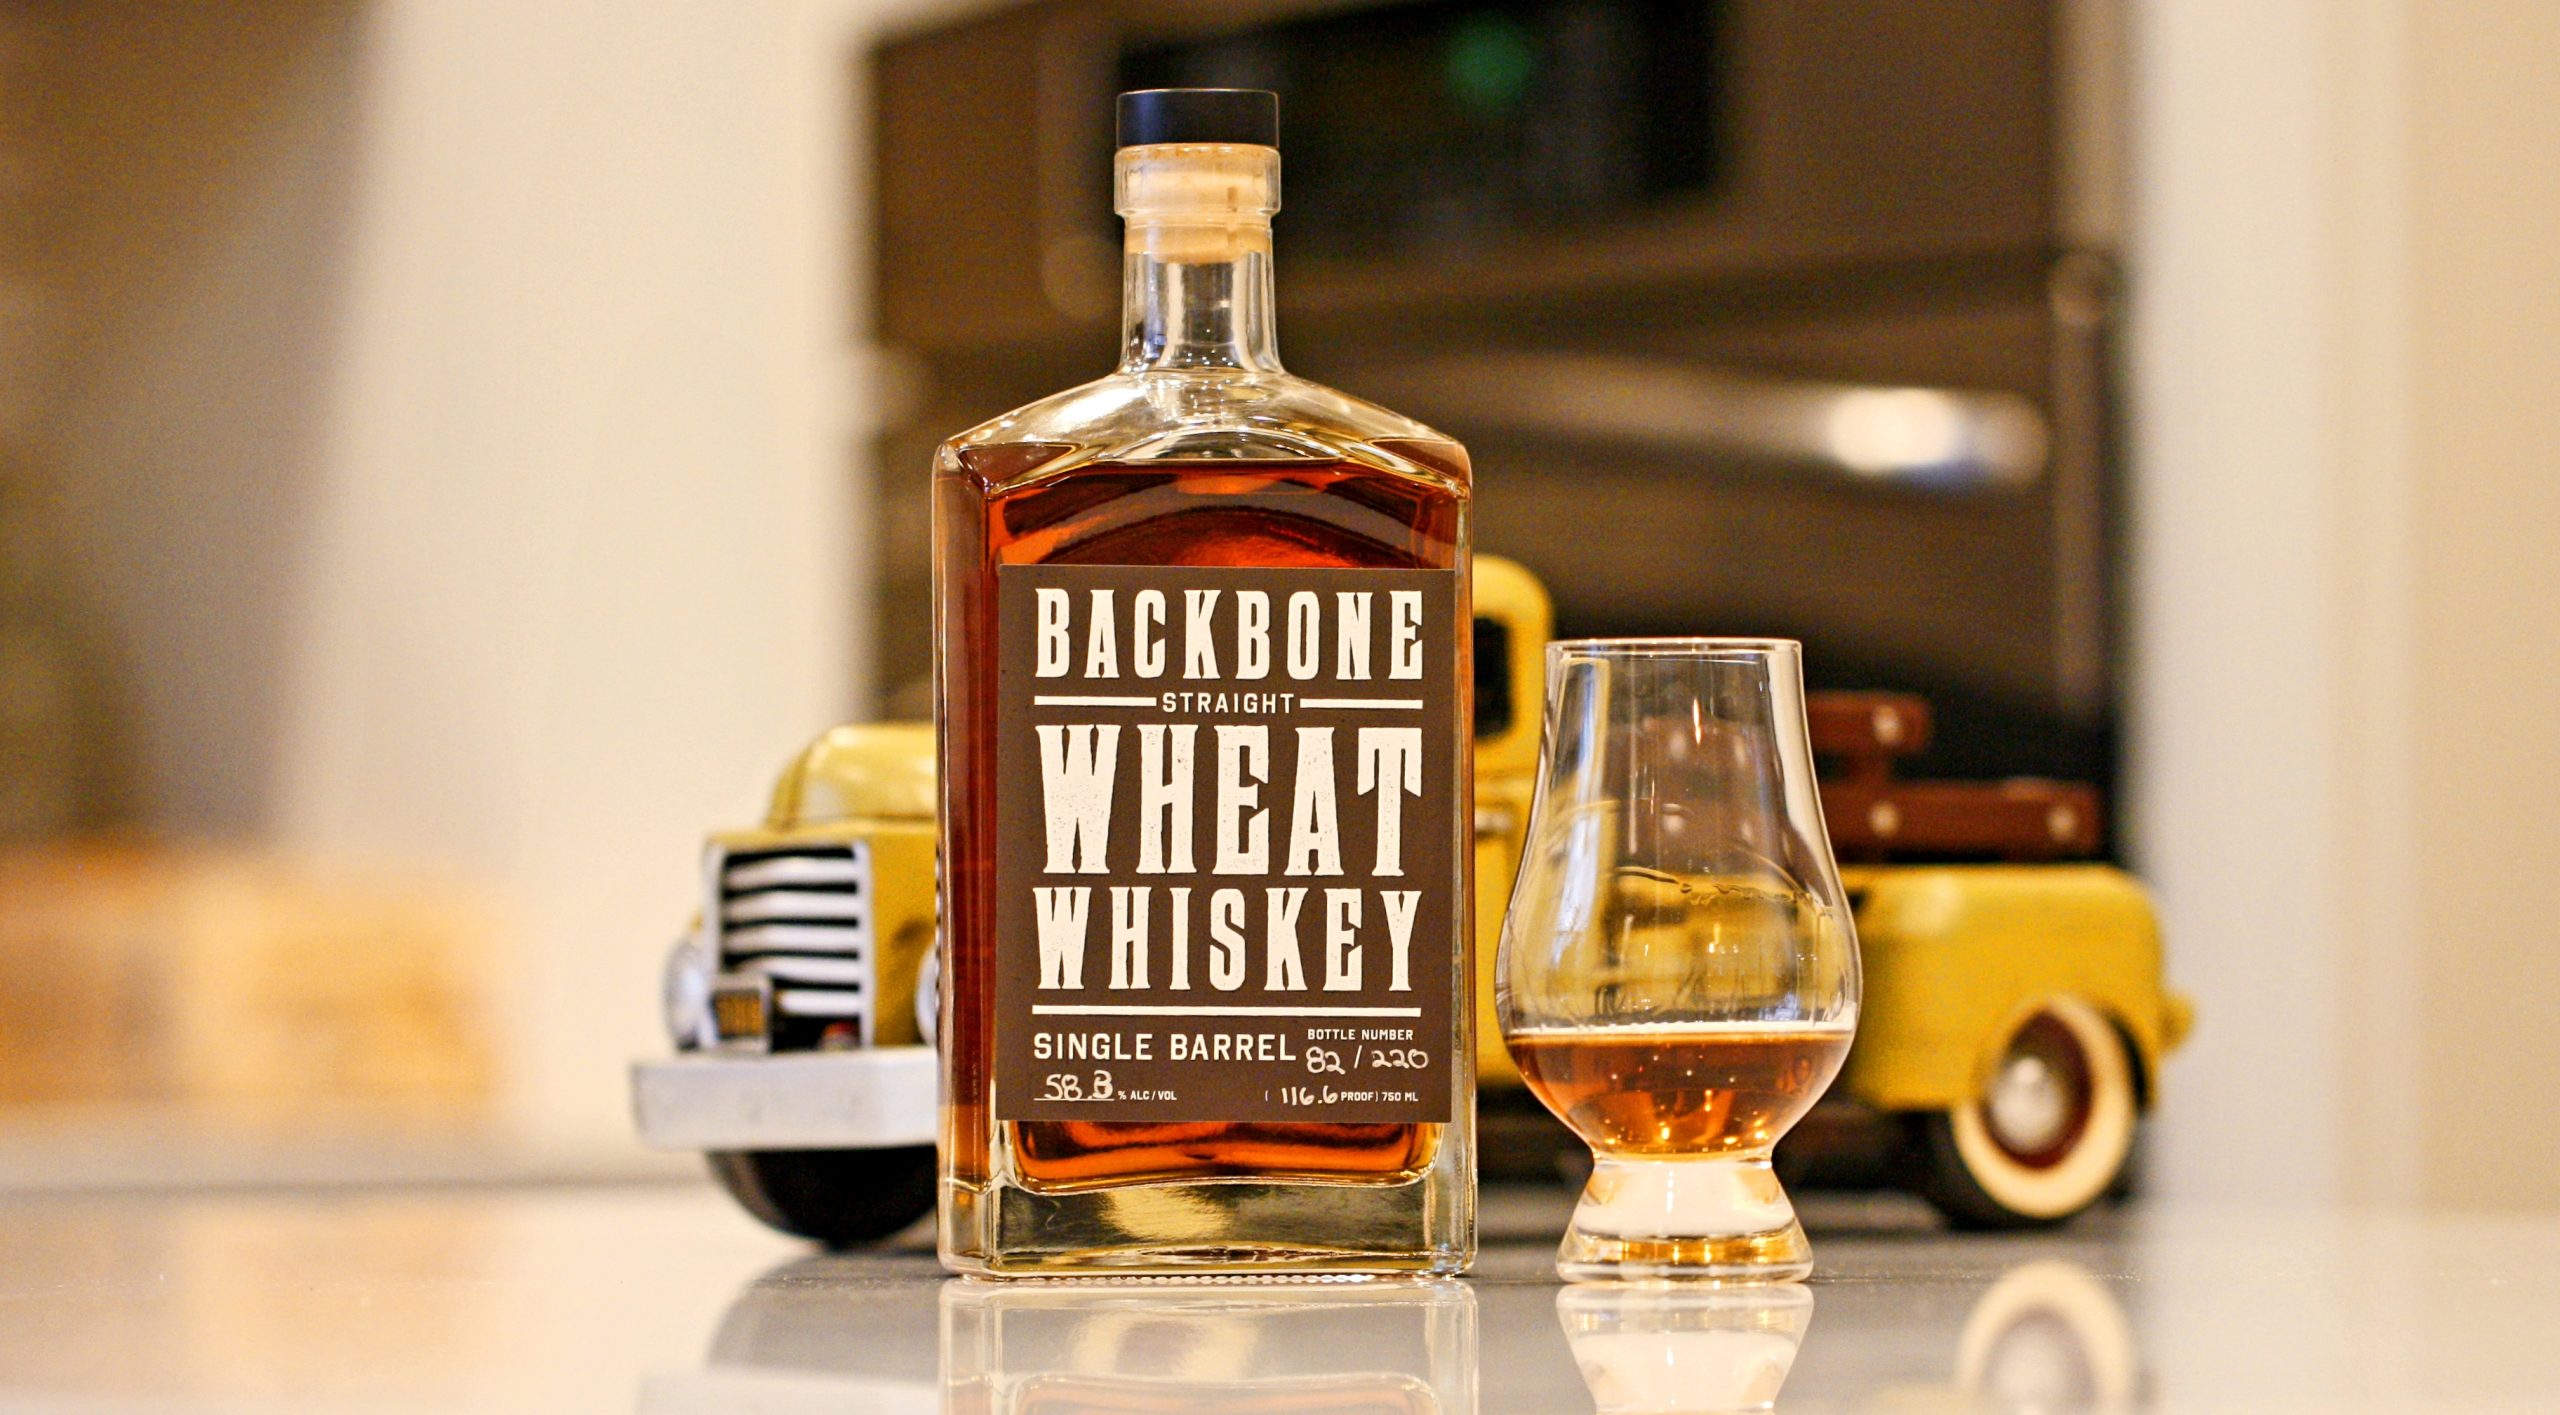 Backbone Wheat Whiskey Review